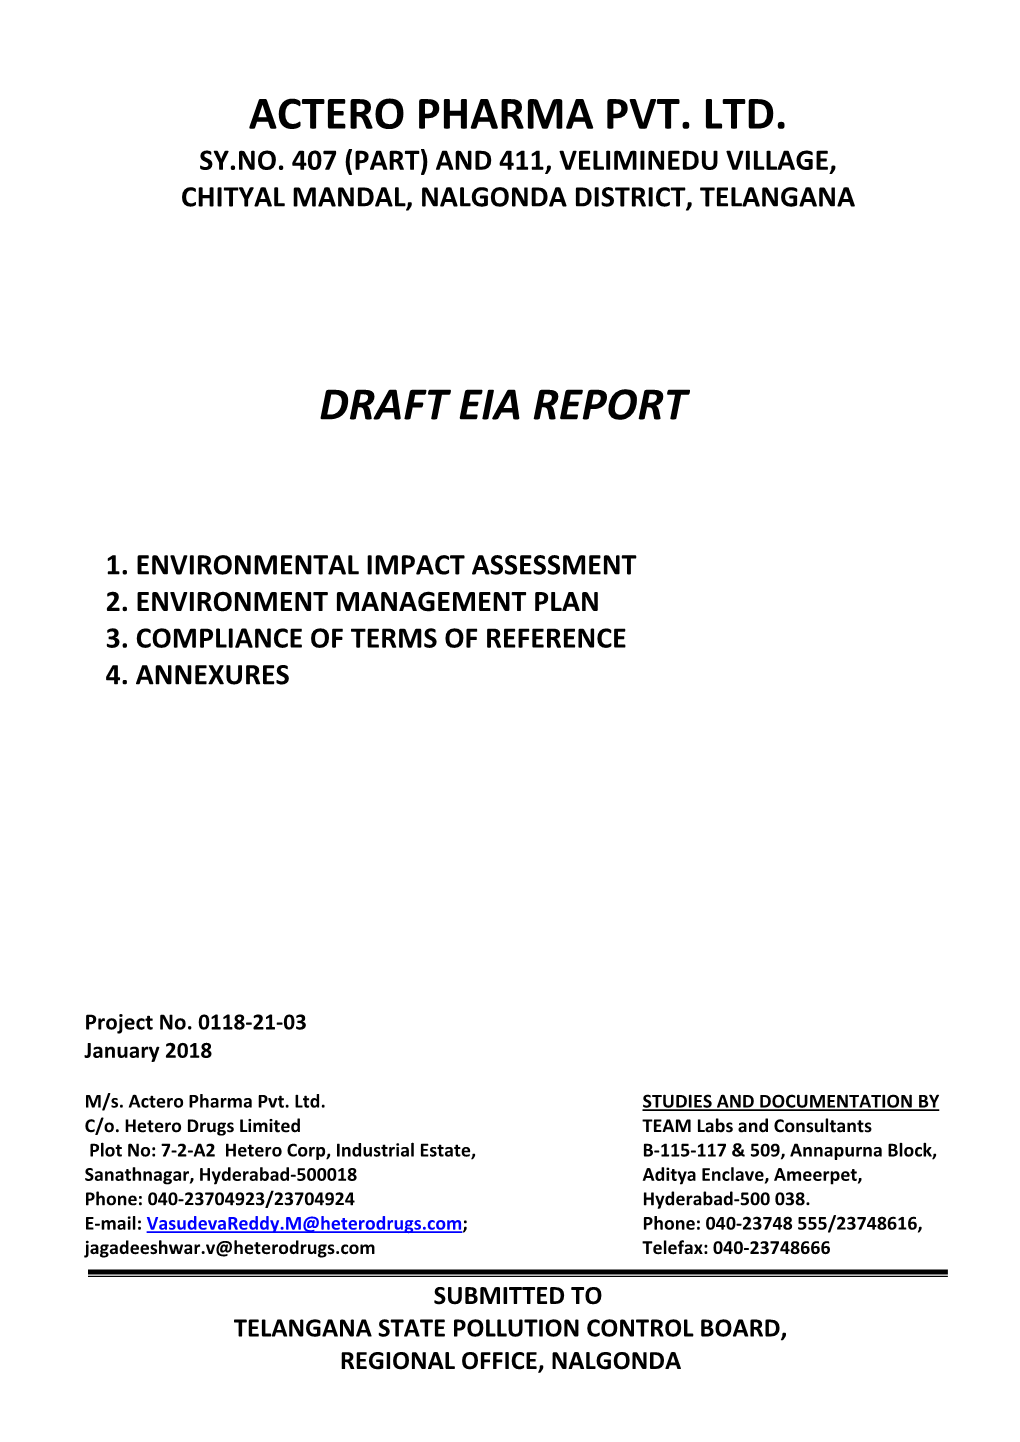 Actero Pharma Pvt. Ltd. Draft Eia Report